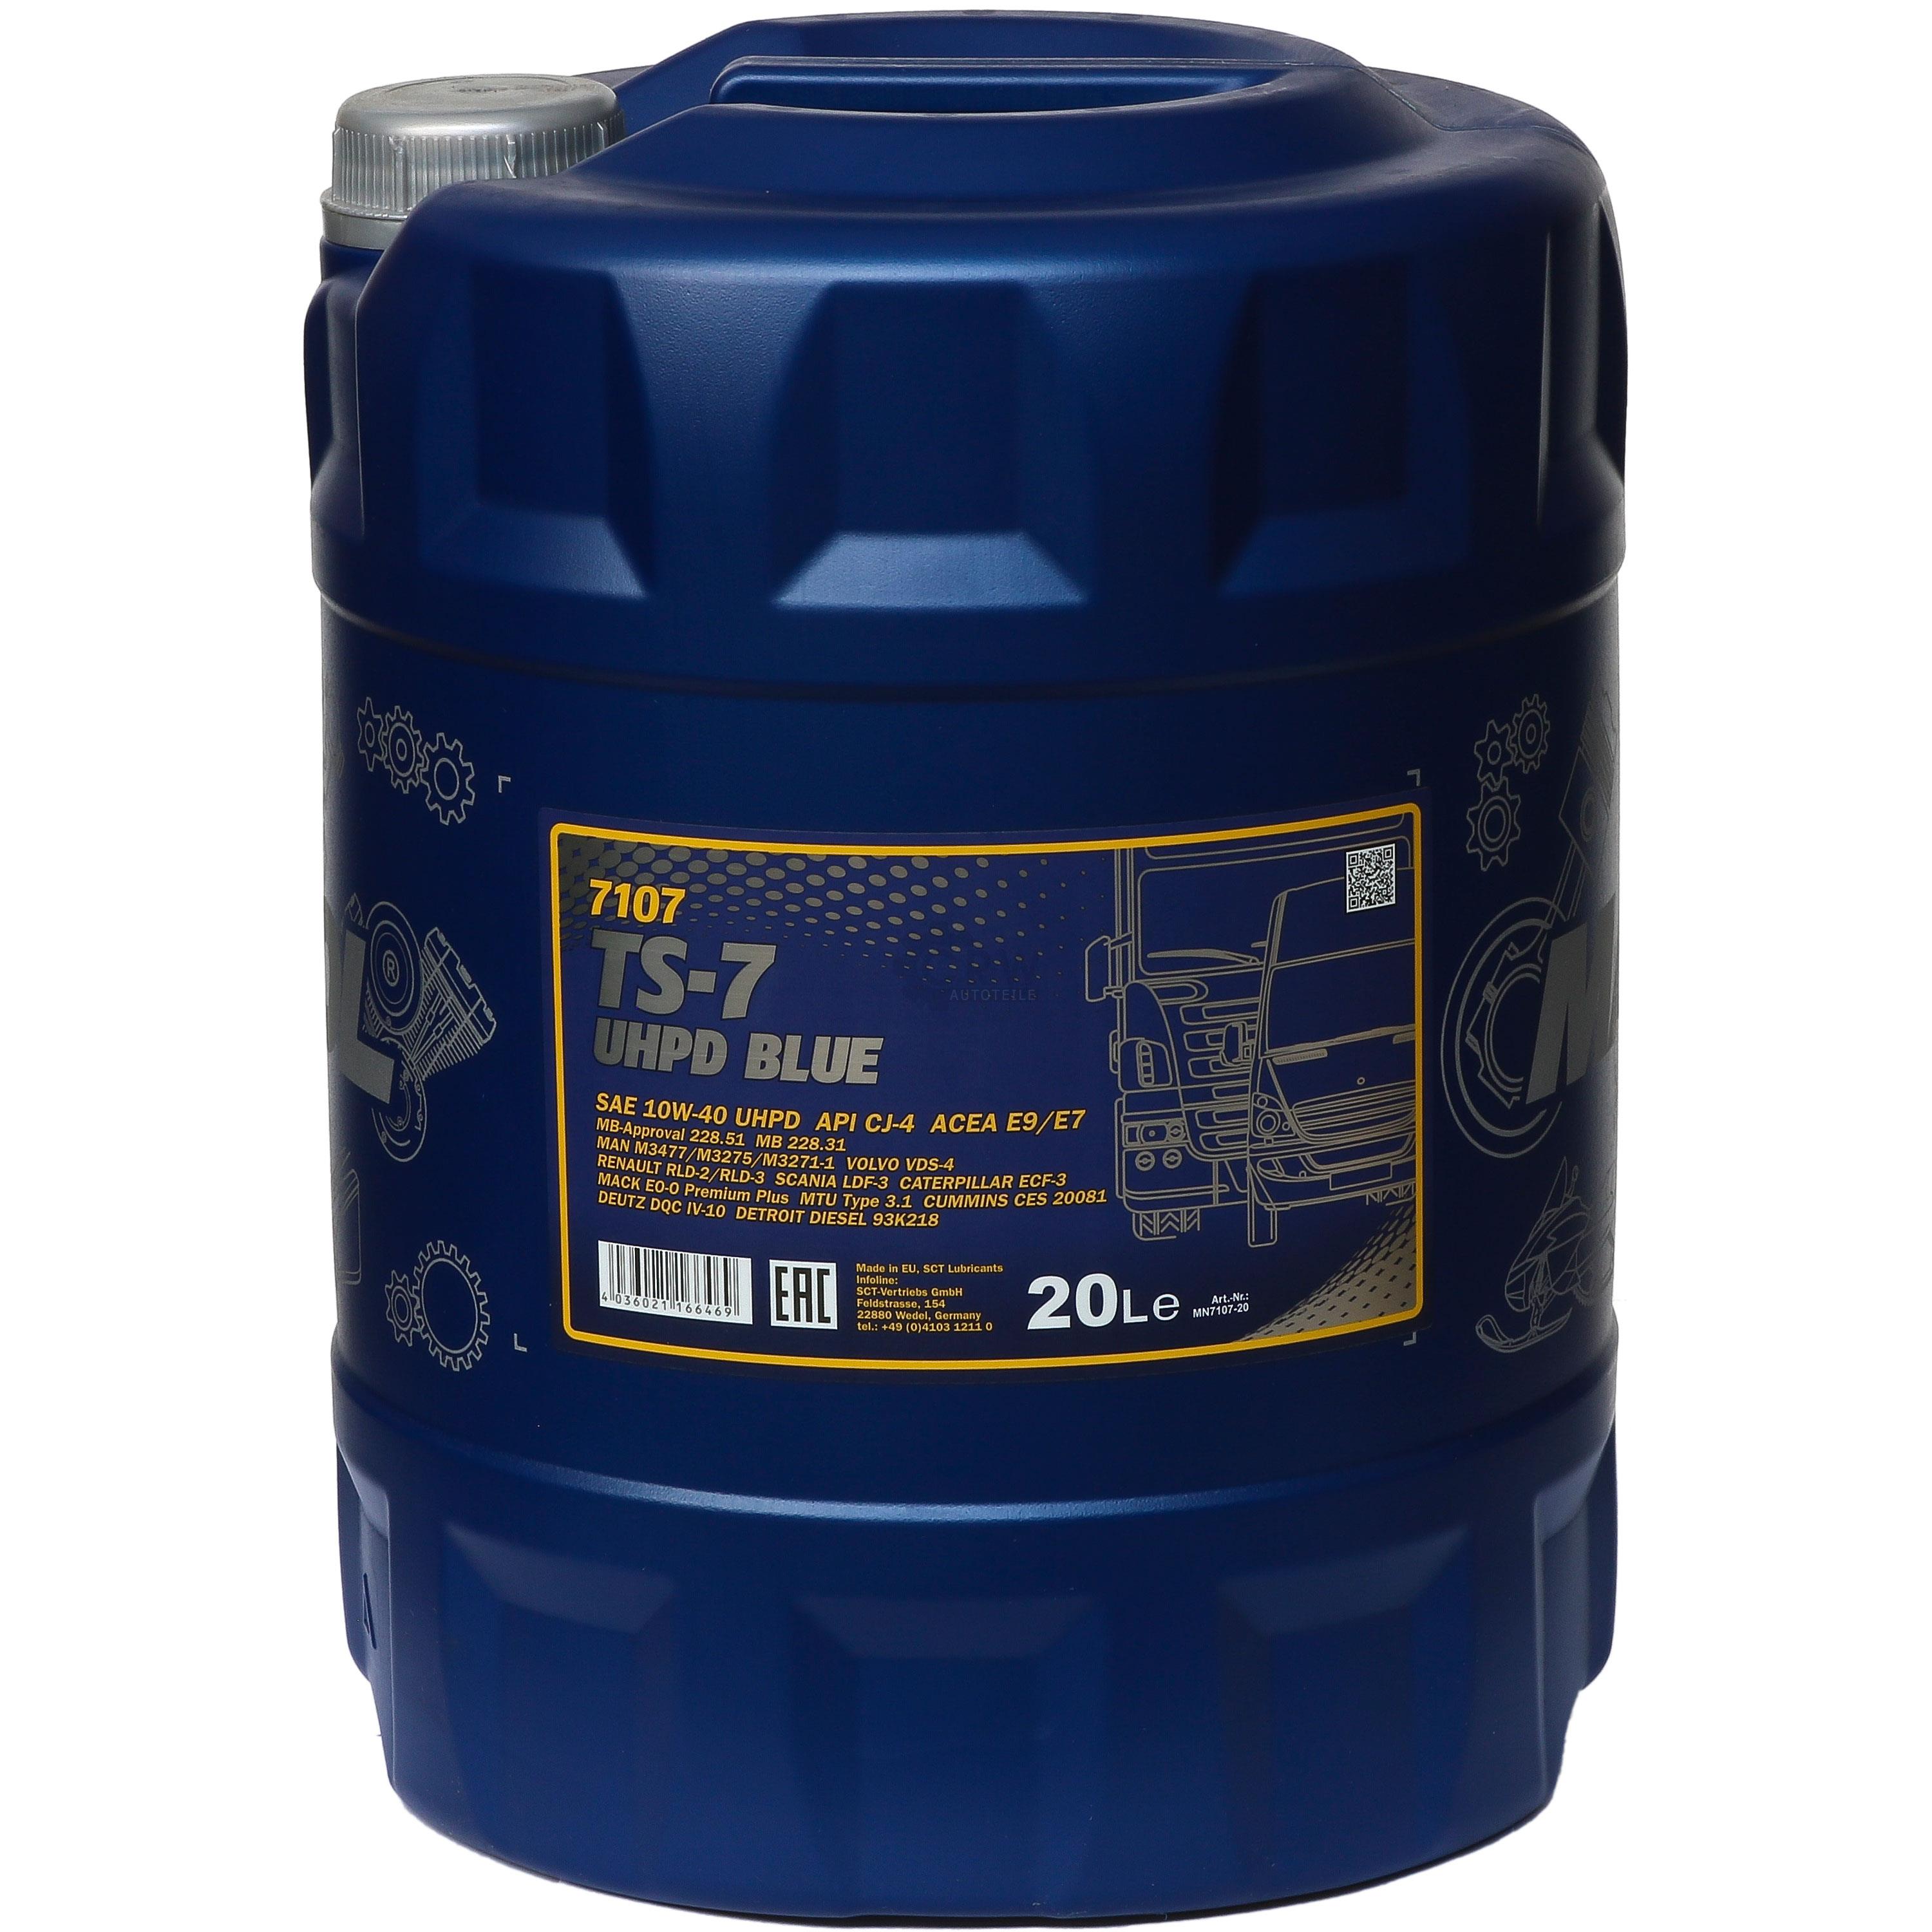 20 Liter MANNOL TS-7 UHPD Blue 10W-40 API CJ-4 Motoröl synthetisch Engine Oil